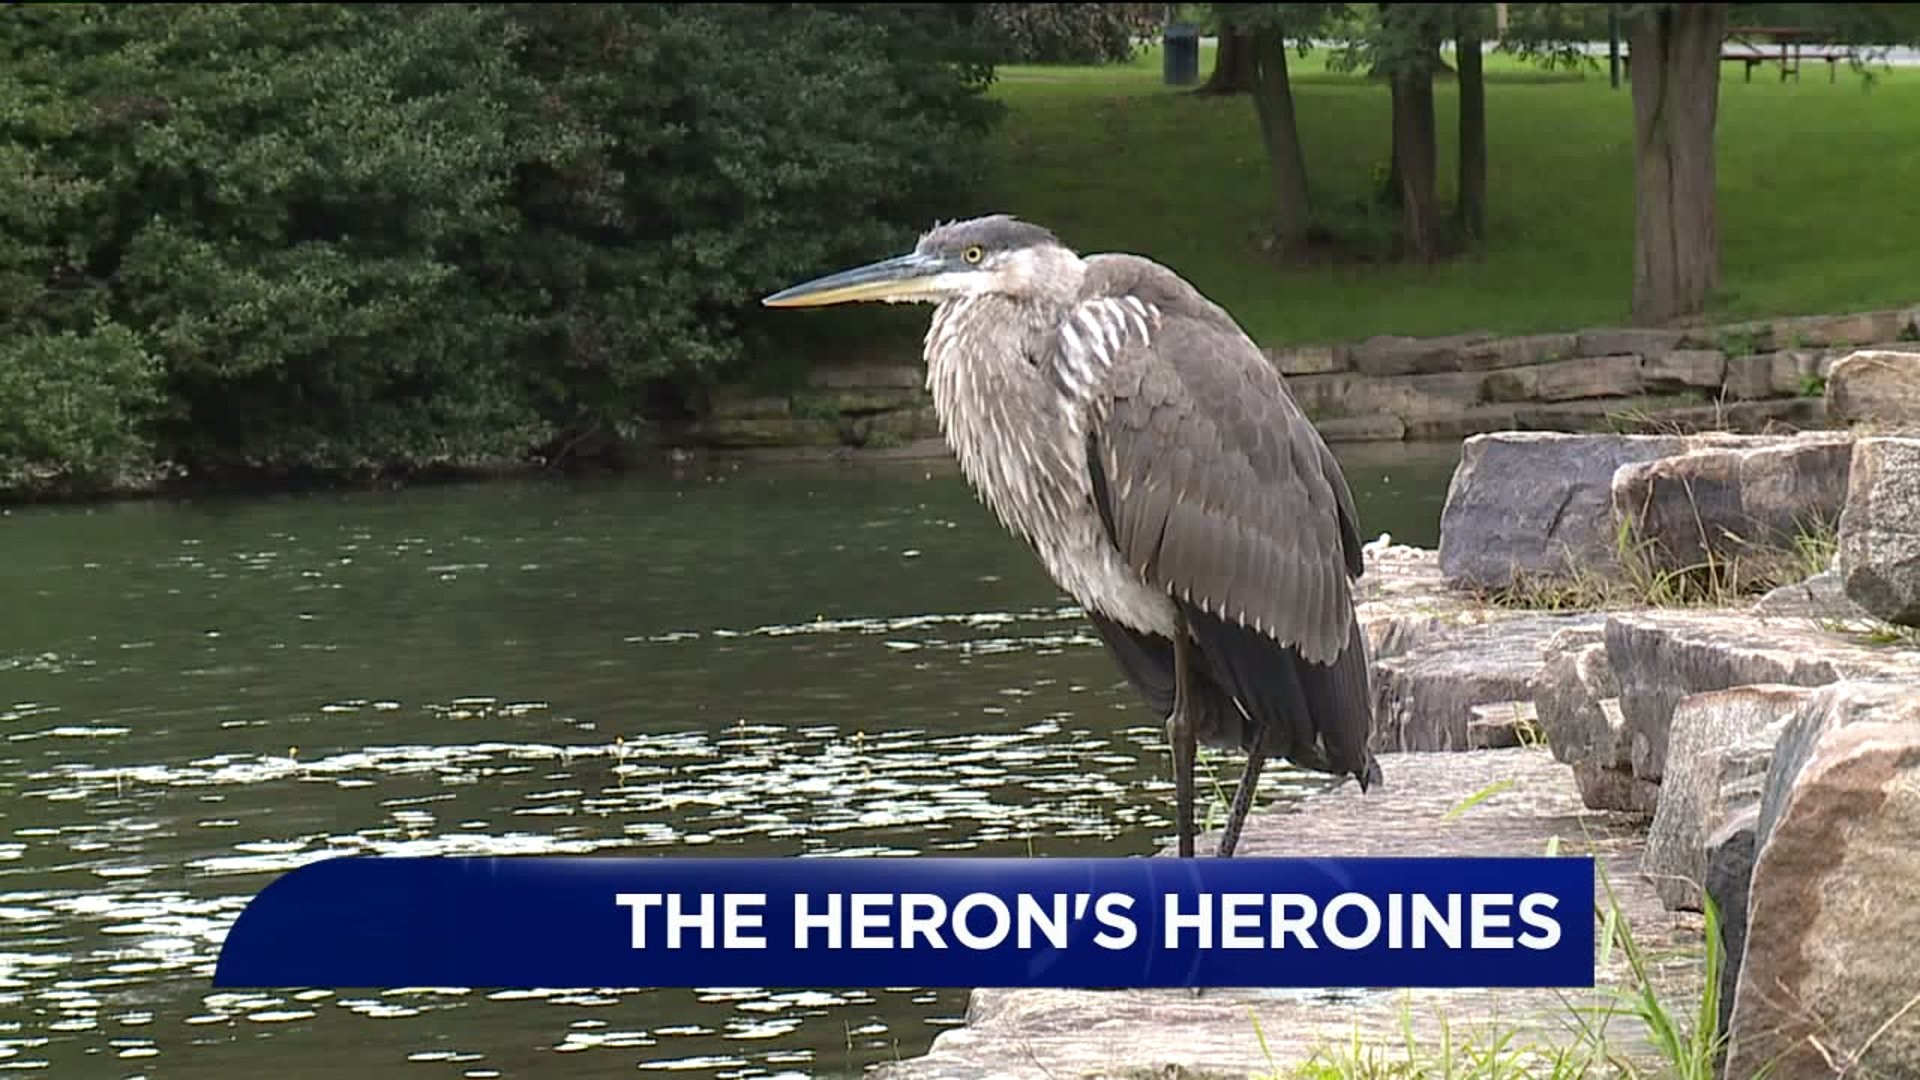 Meet the Tangled Heron's Heroines